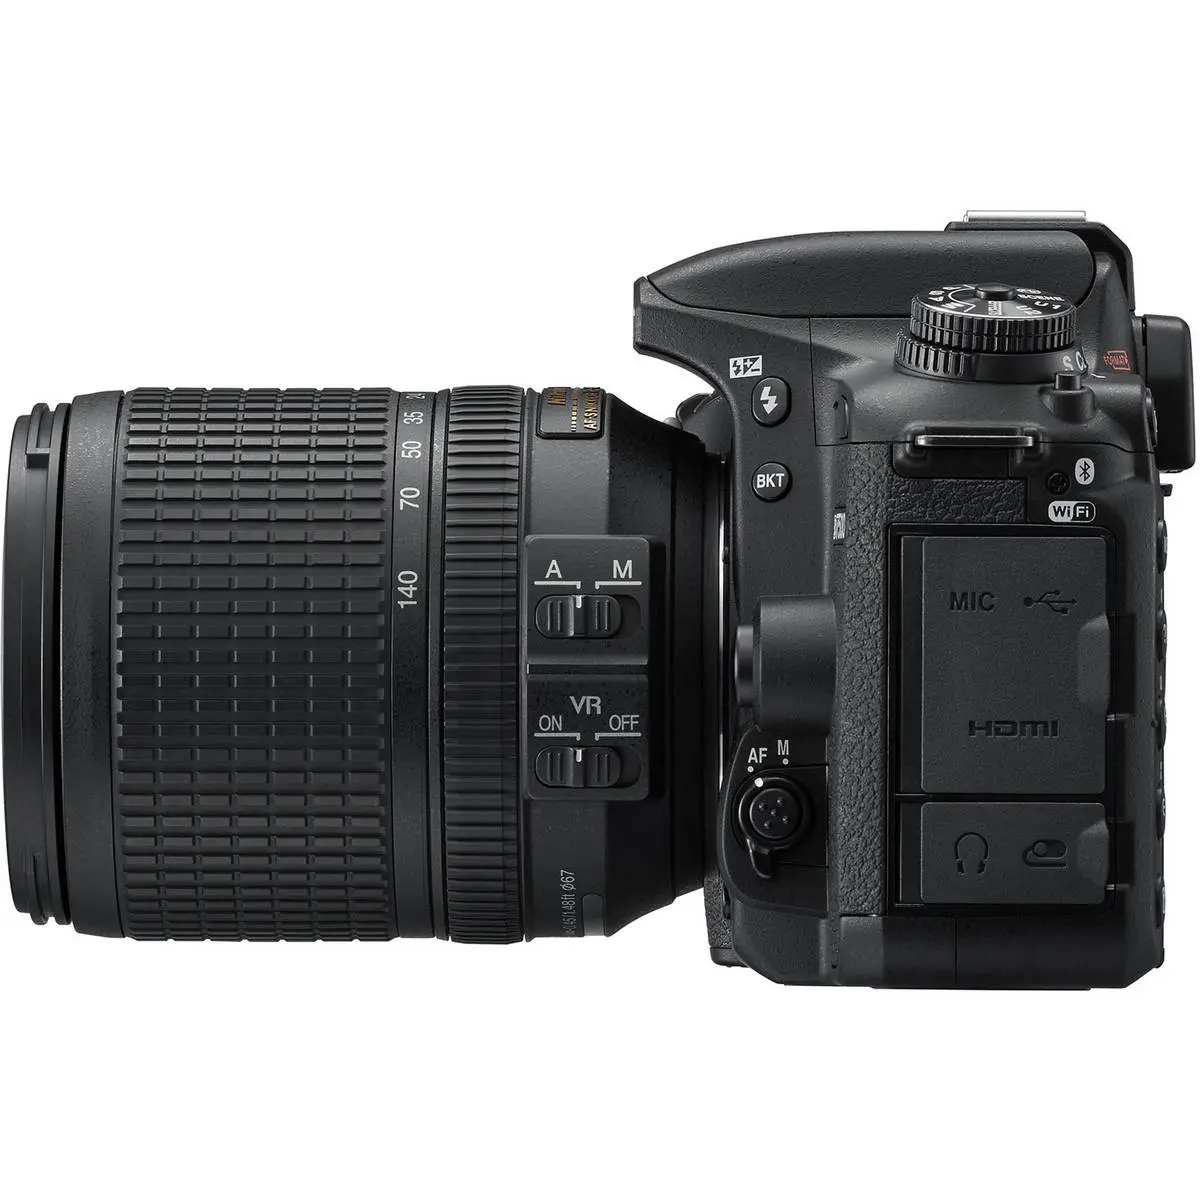 6. Nikon D7500 18-140 kit 20.9MP 4K UltraHD Digital SLR Camera